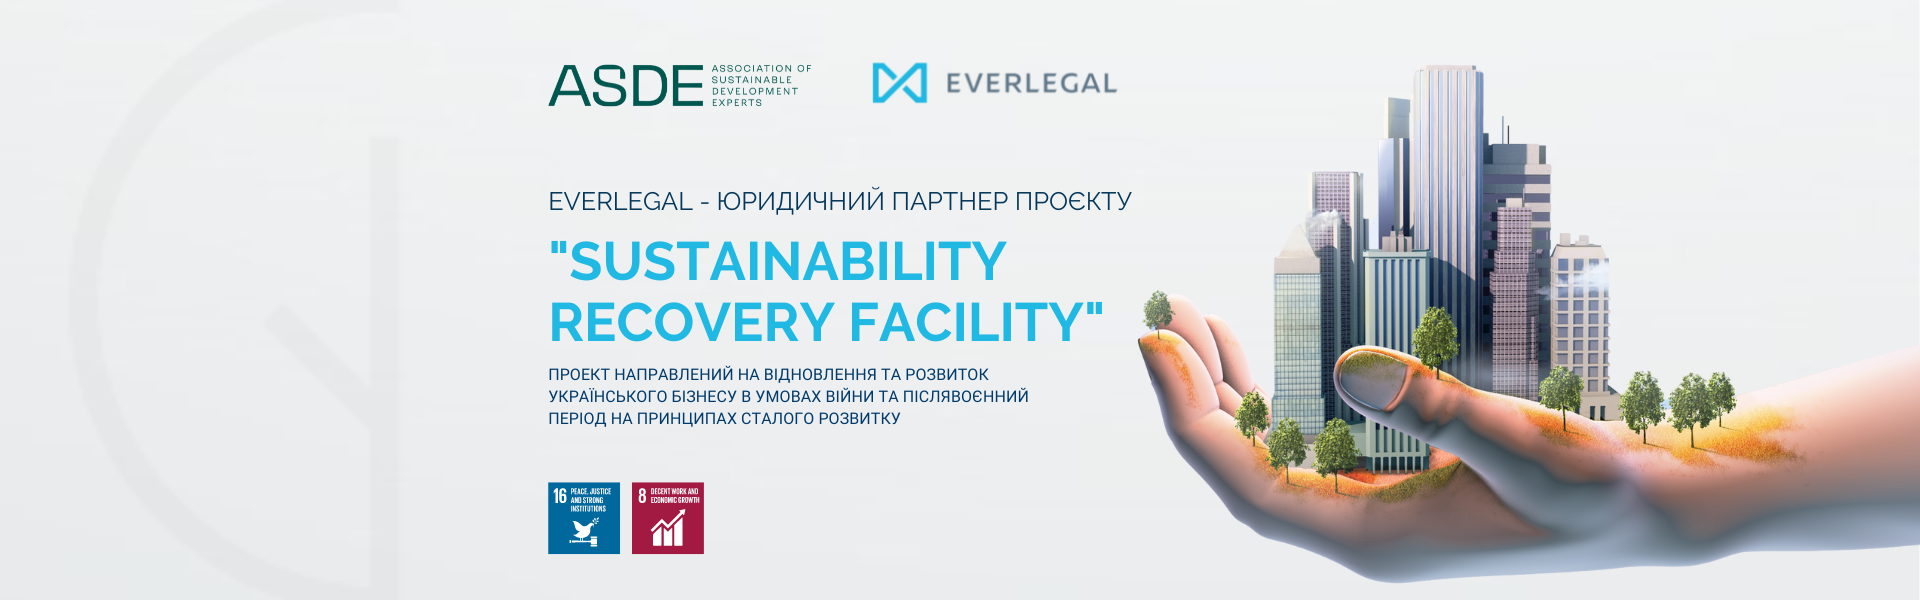 EVERLEGAL - юридичний партнер проєкту Sustainability Recovery Facility